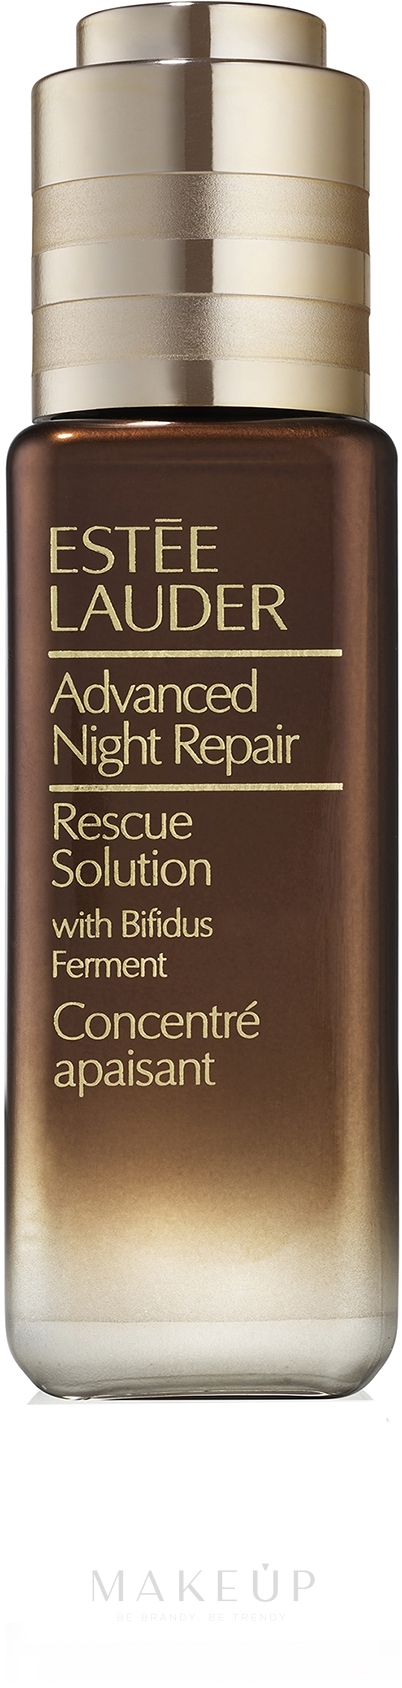 Gesichtsserum - Estee Lauder Advanced Night Repair Rescue Solution Serum with 15% Bifidus Ferment — Bild 20 ml